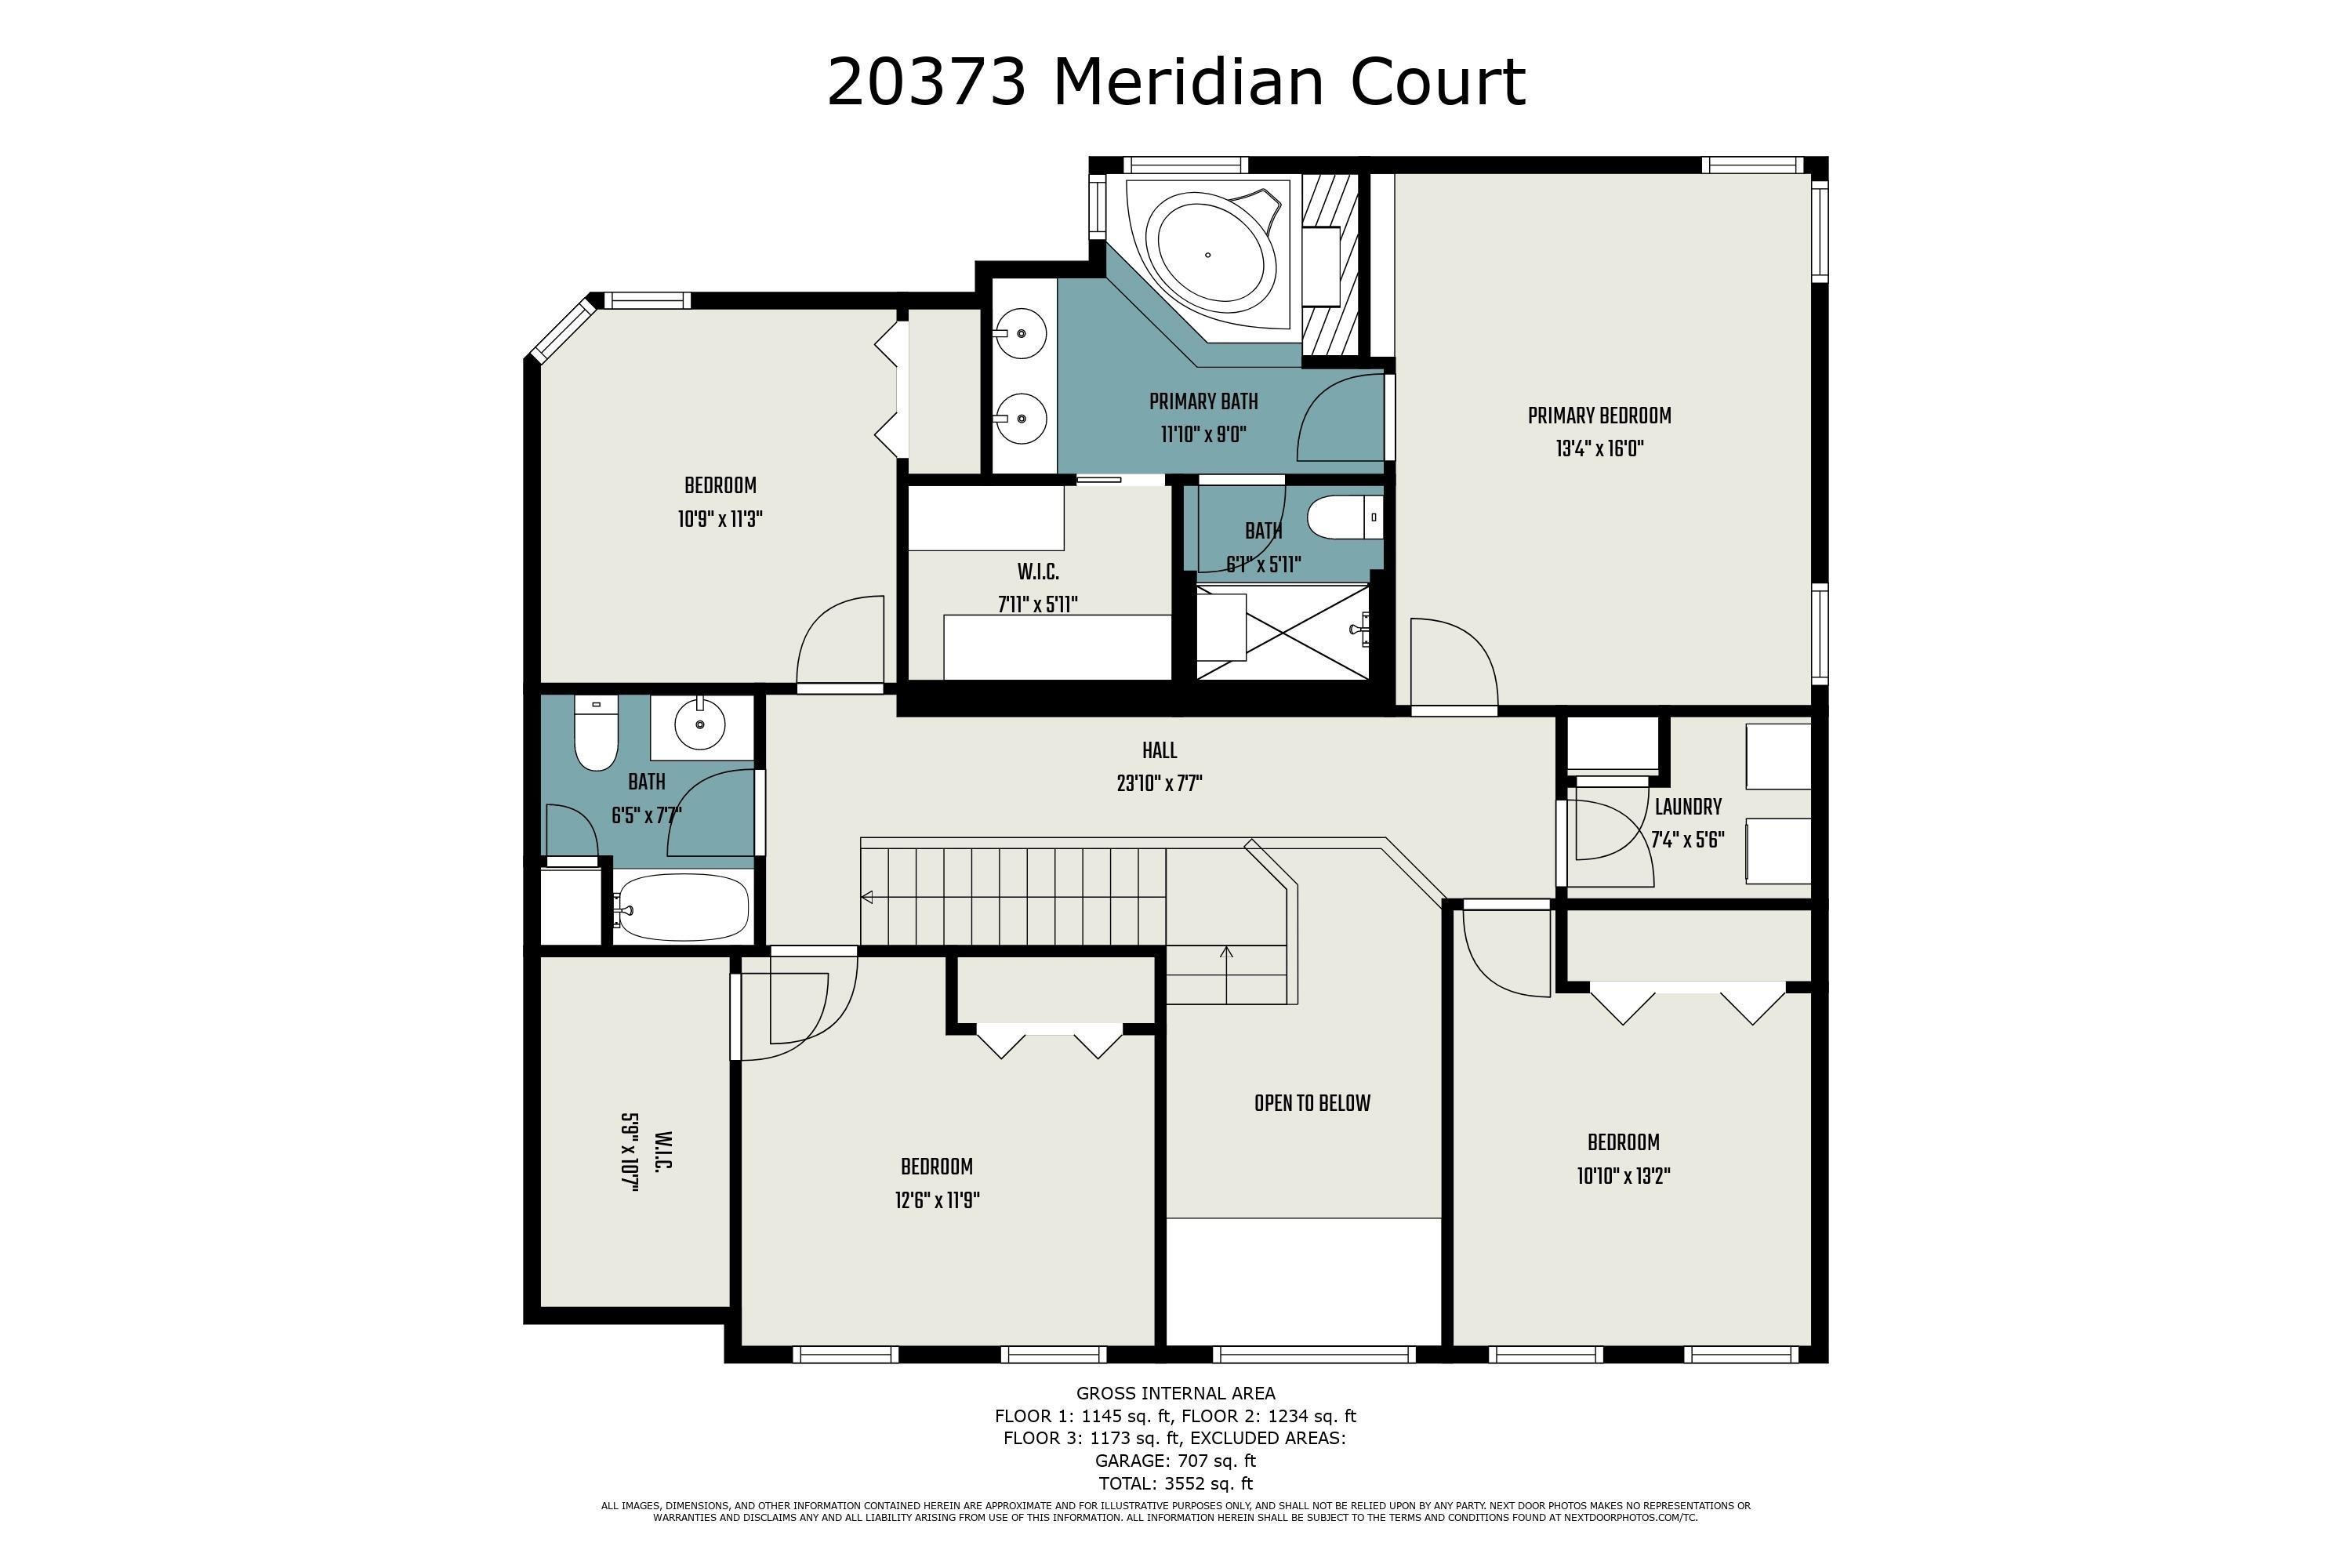 36. 20373 Meridian Court